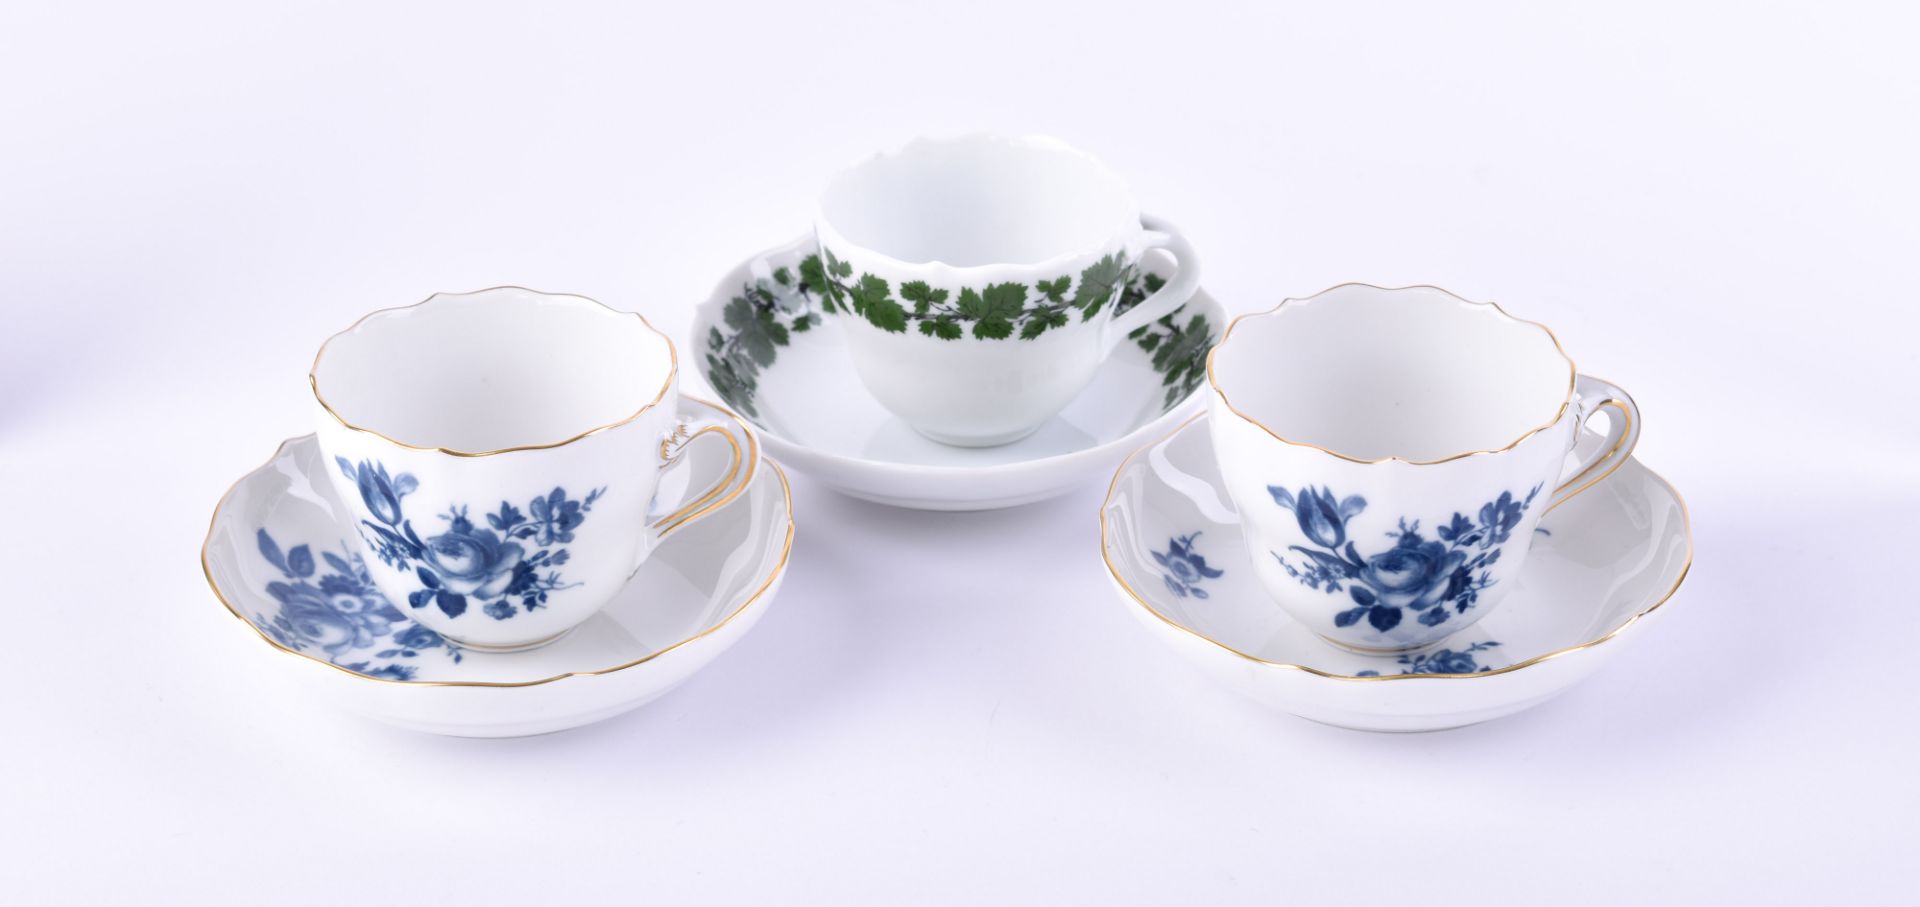   A group of porcelain Meissen